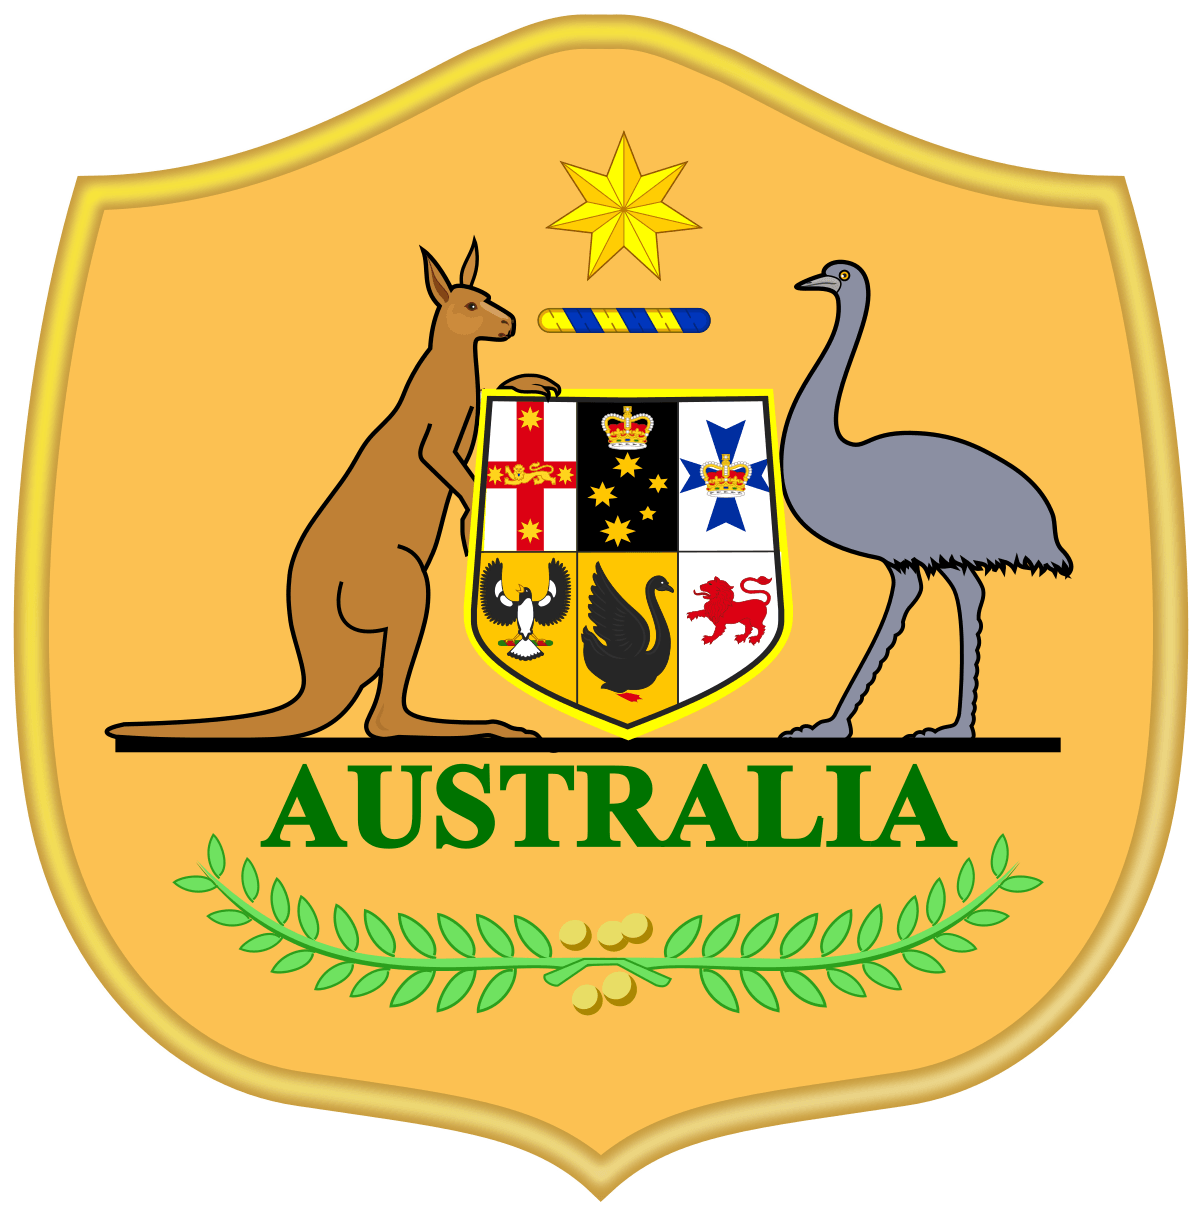 Socceroos Logo - Australia national soccer team